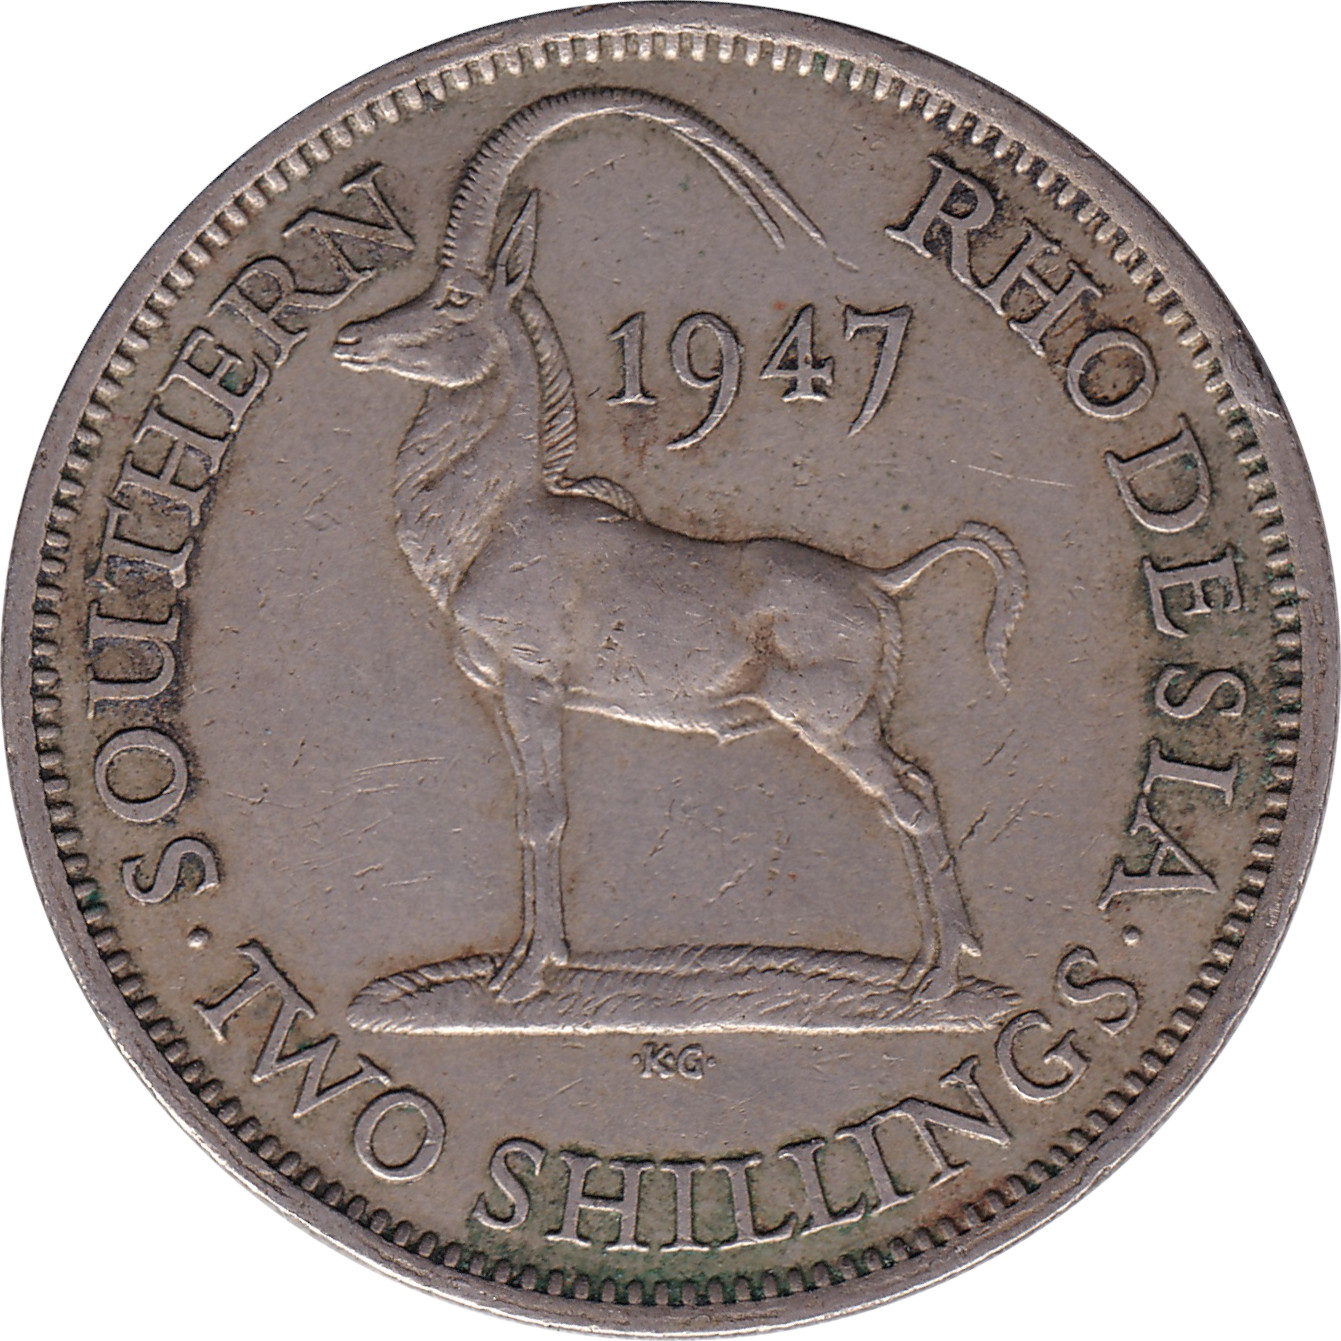 2 shillings - Georges VI - Petite tête